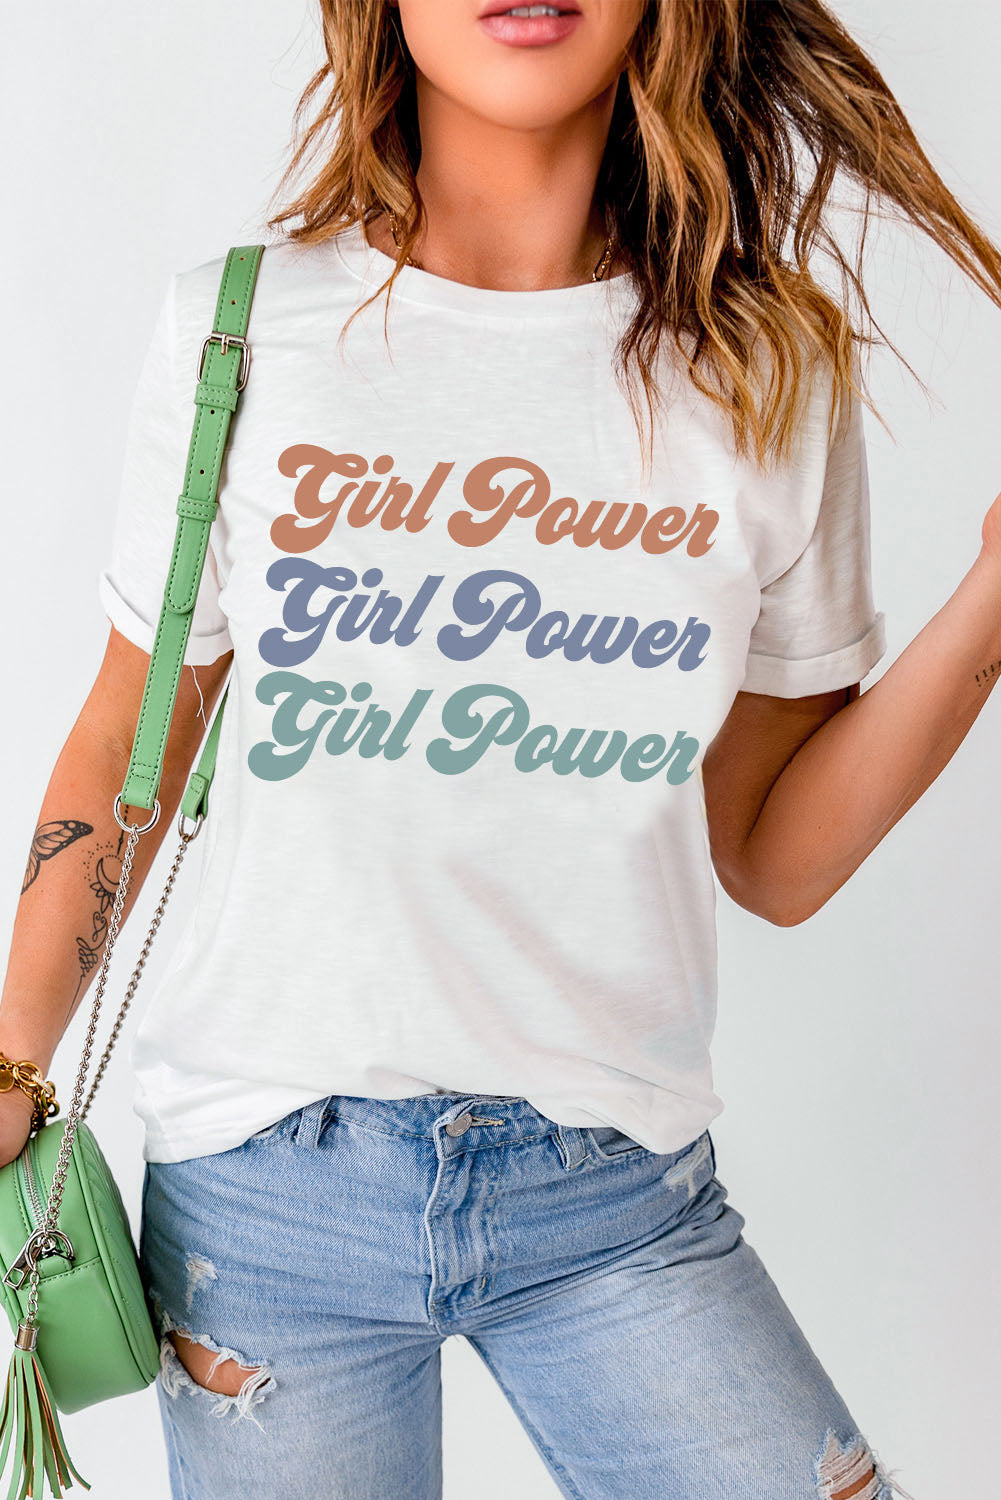 GIRL POWER Graphic Tee